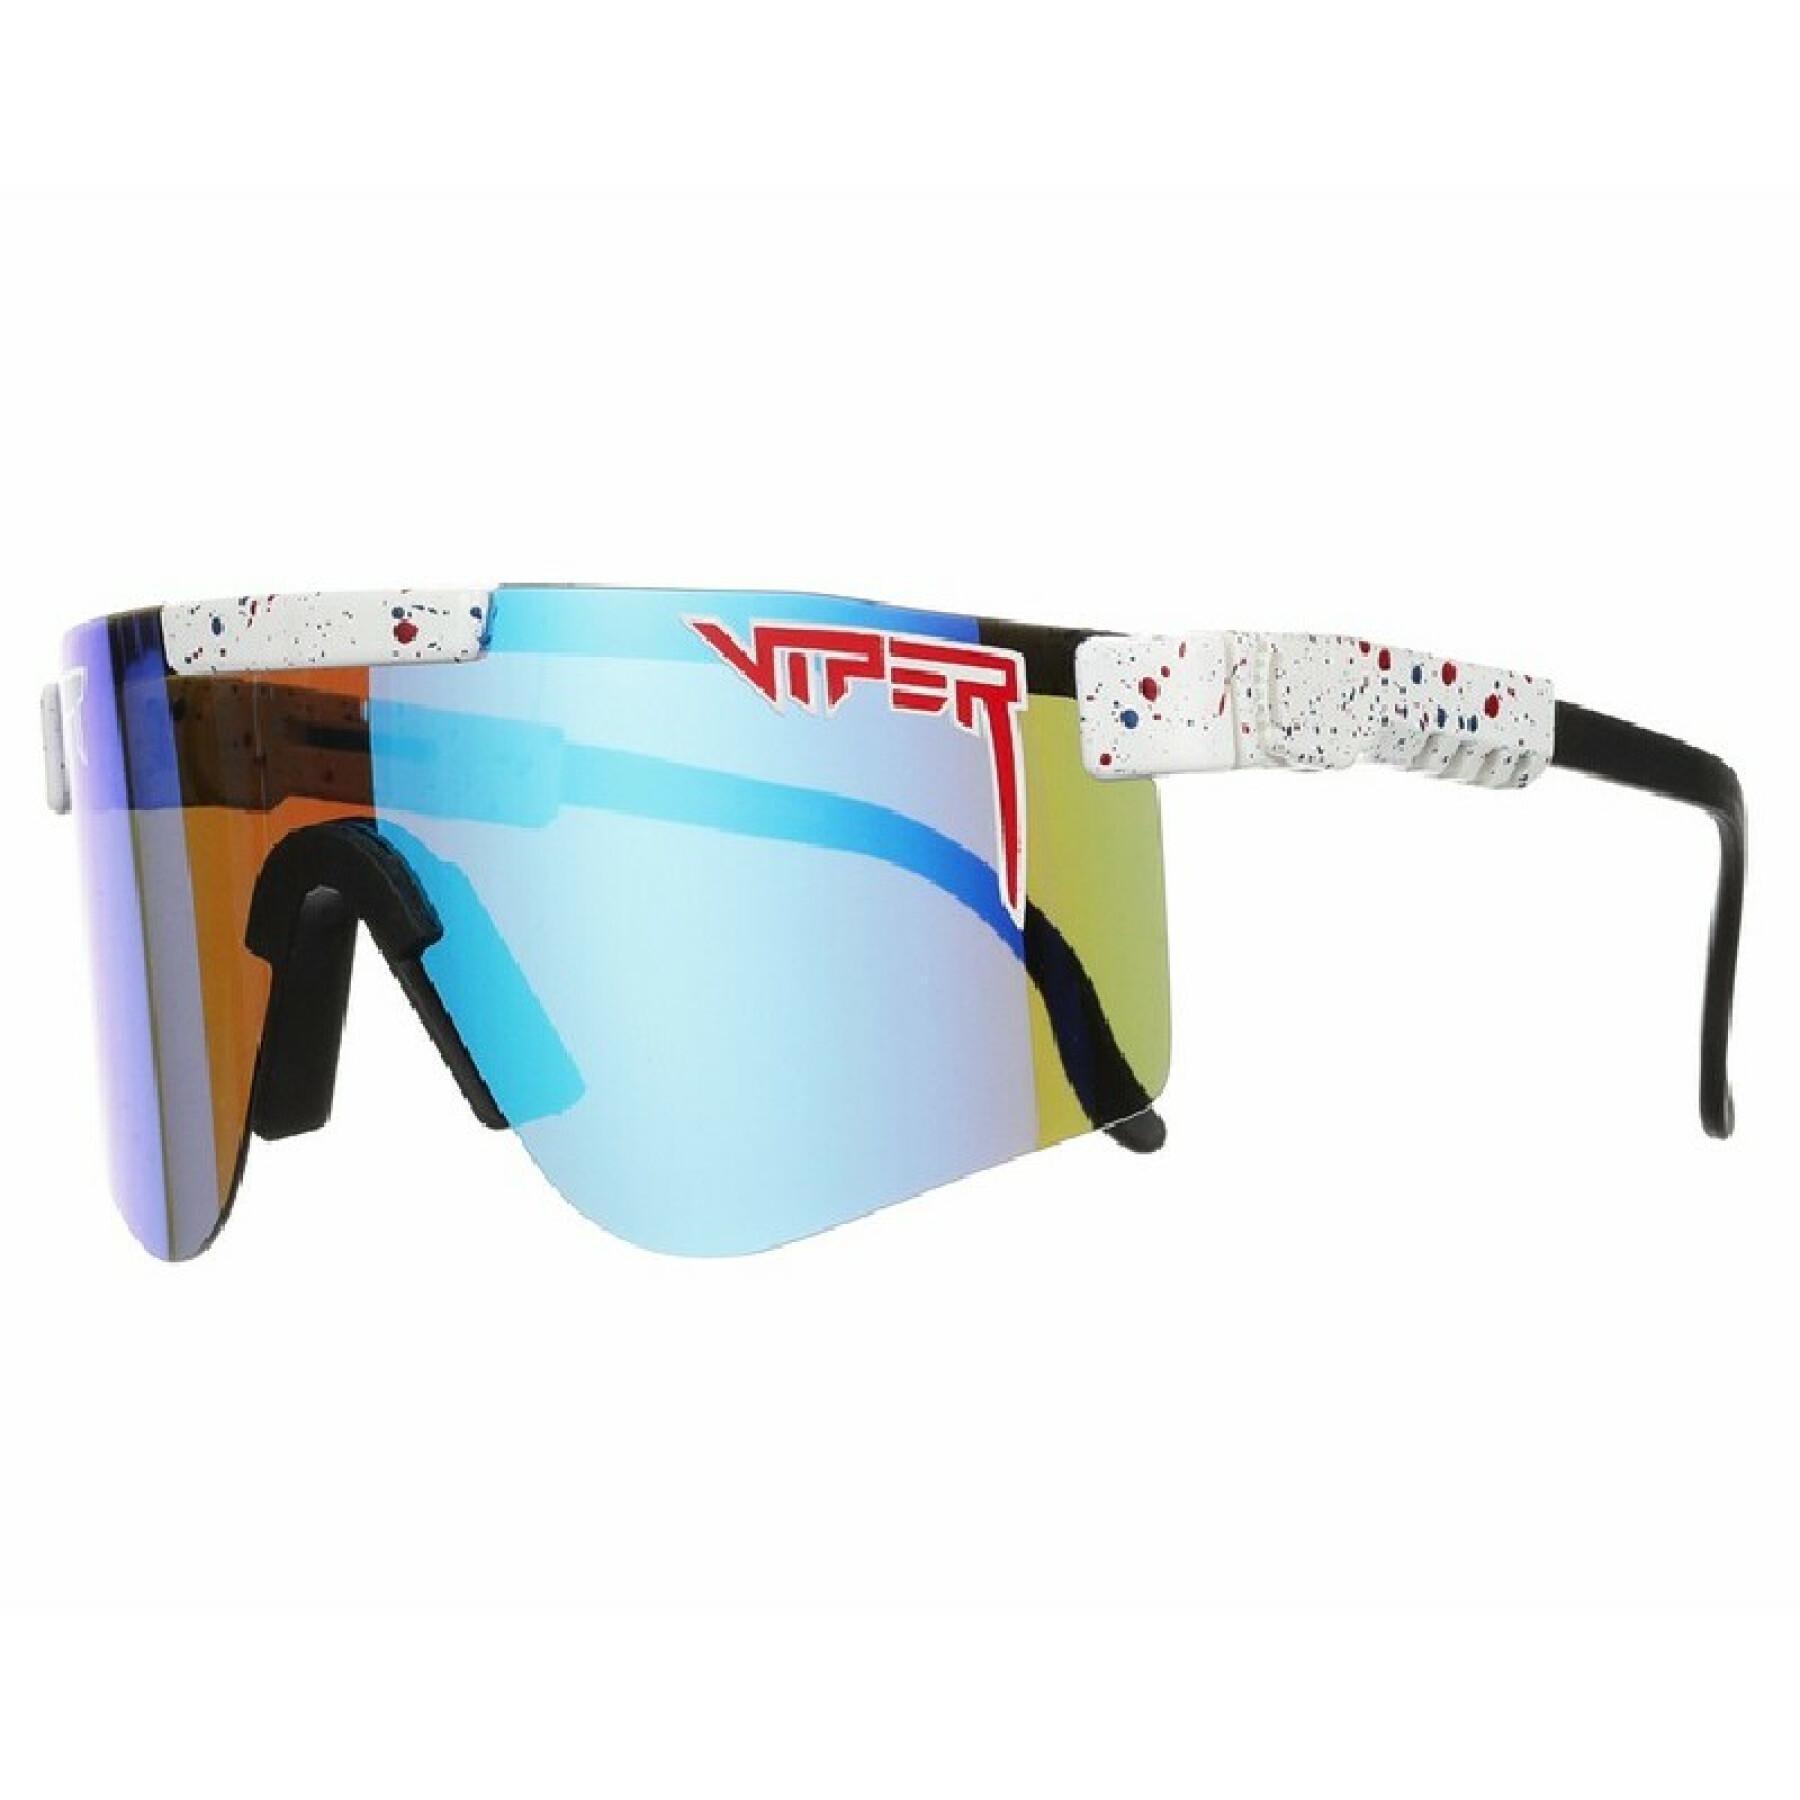 Original Sonnenbrille doppelt polarisiert breit Pit Viper The Absolute Freedom